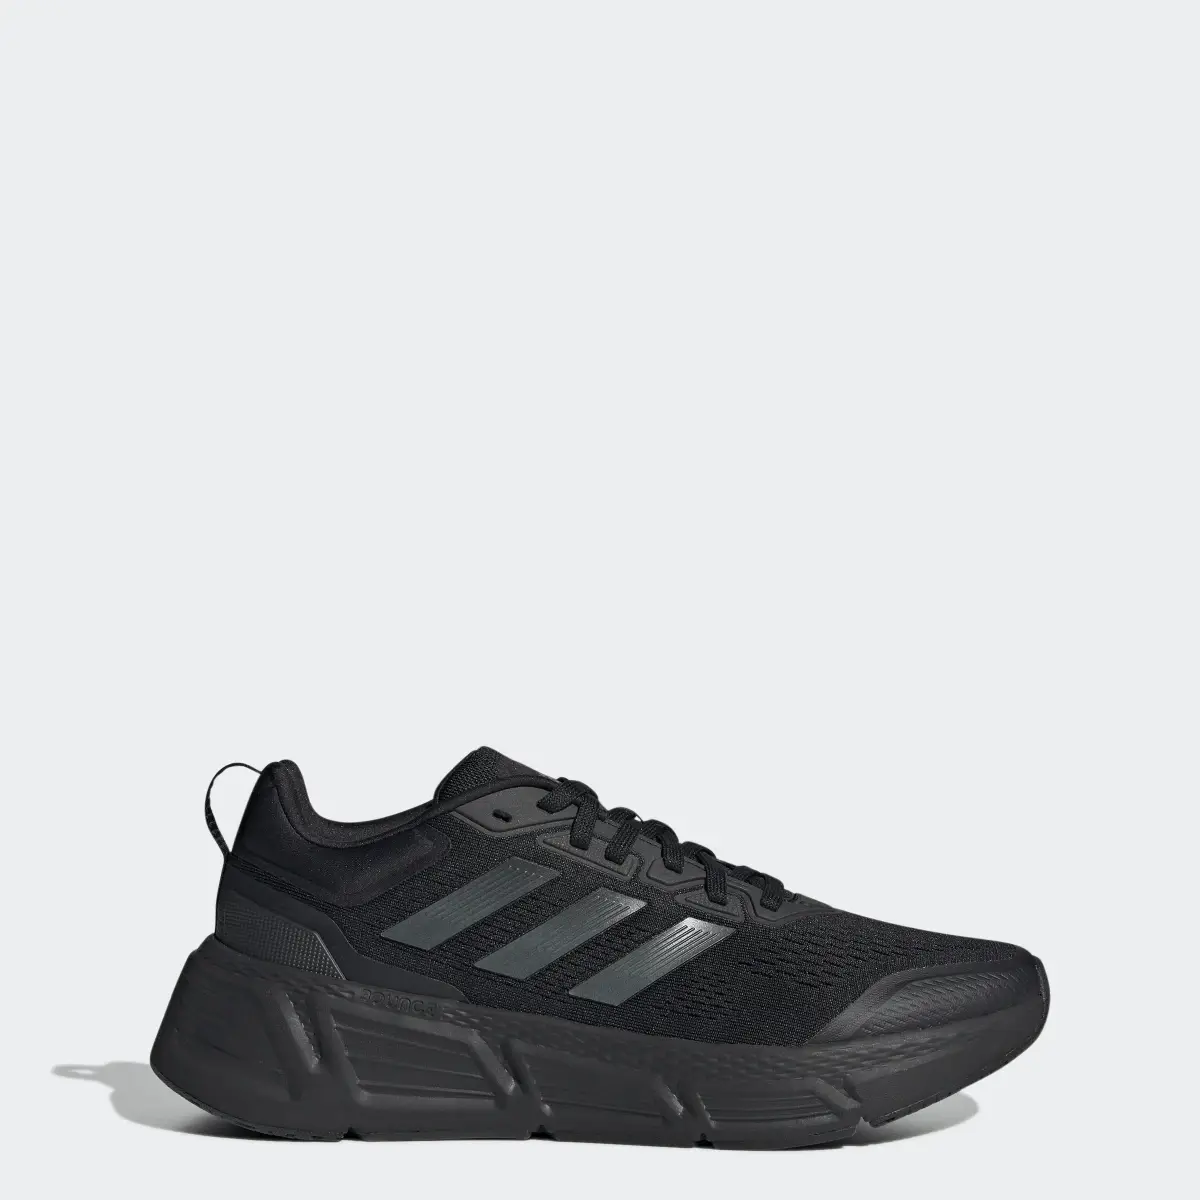 Adidas Questar Running Shoes. 1